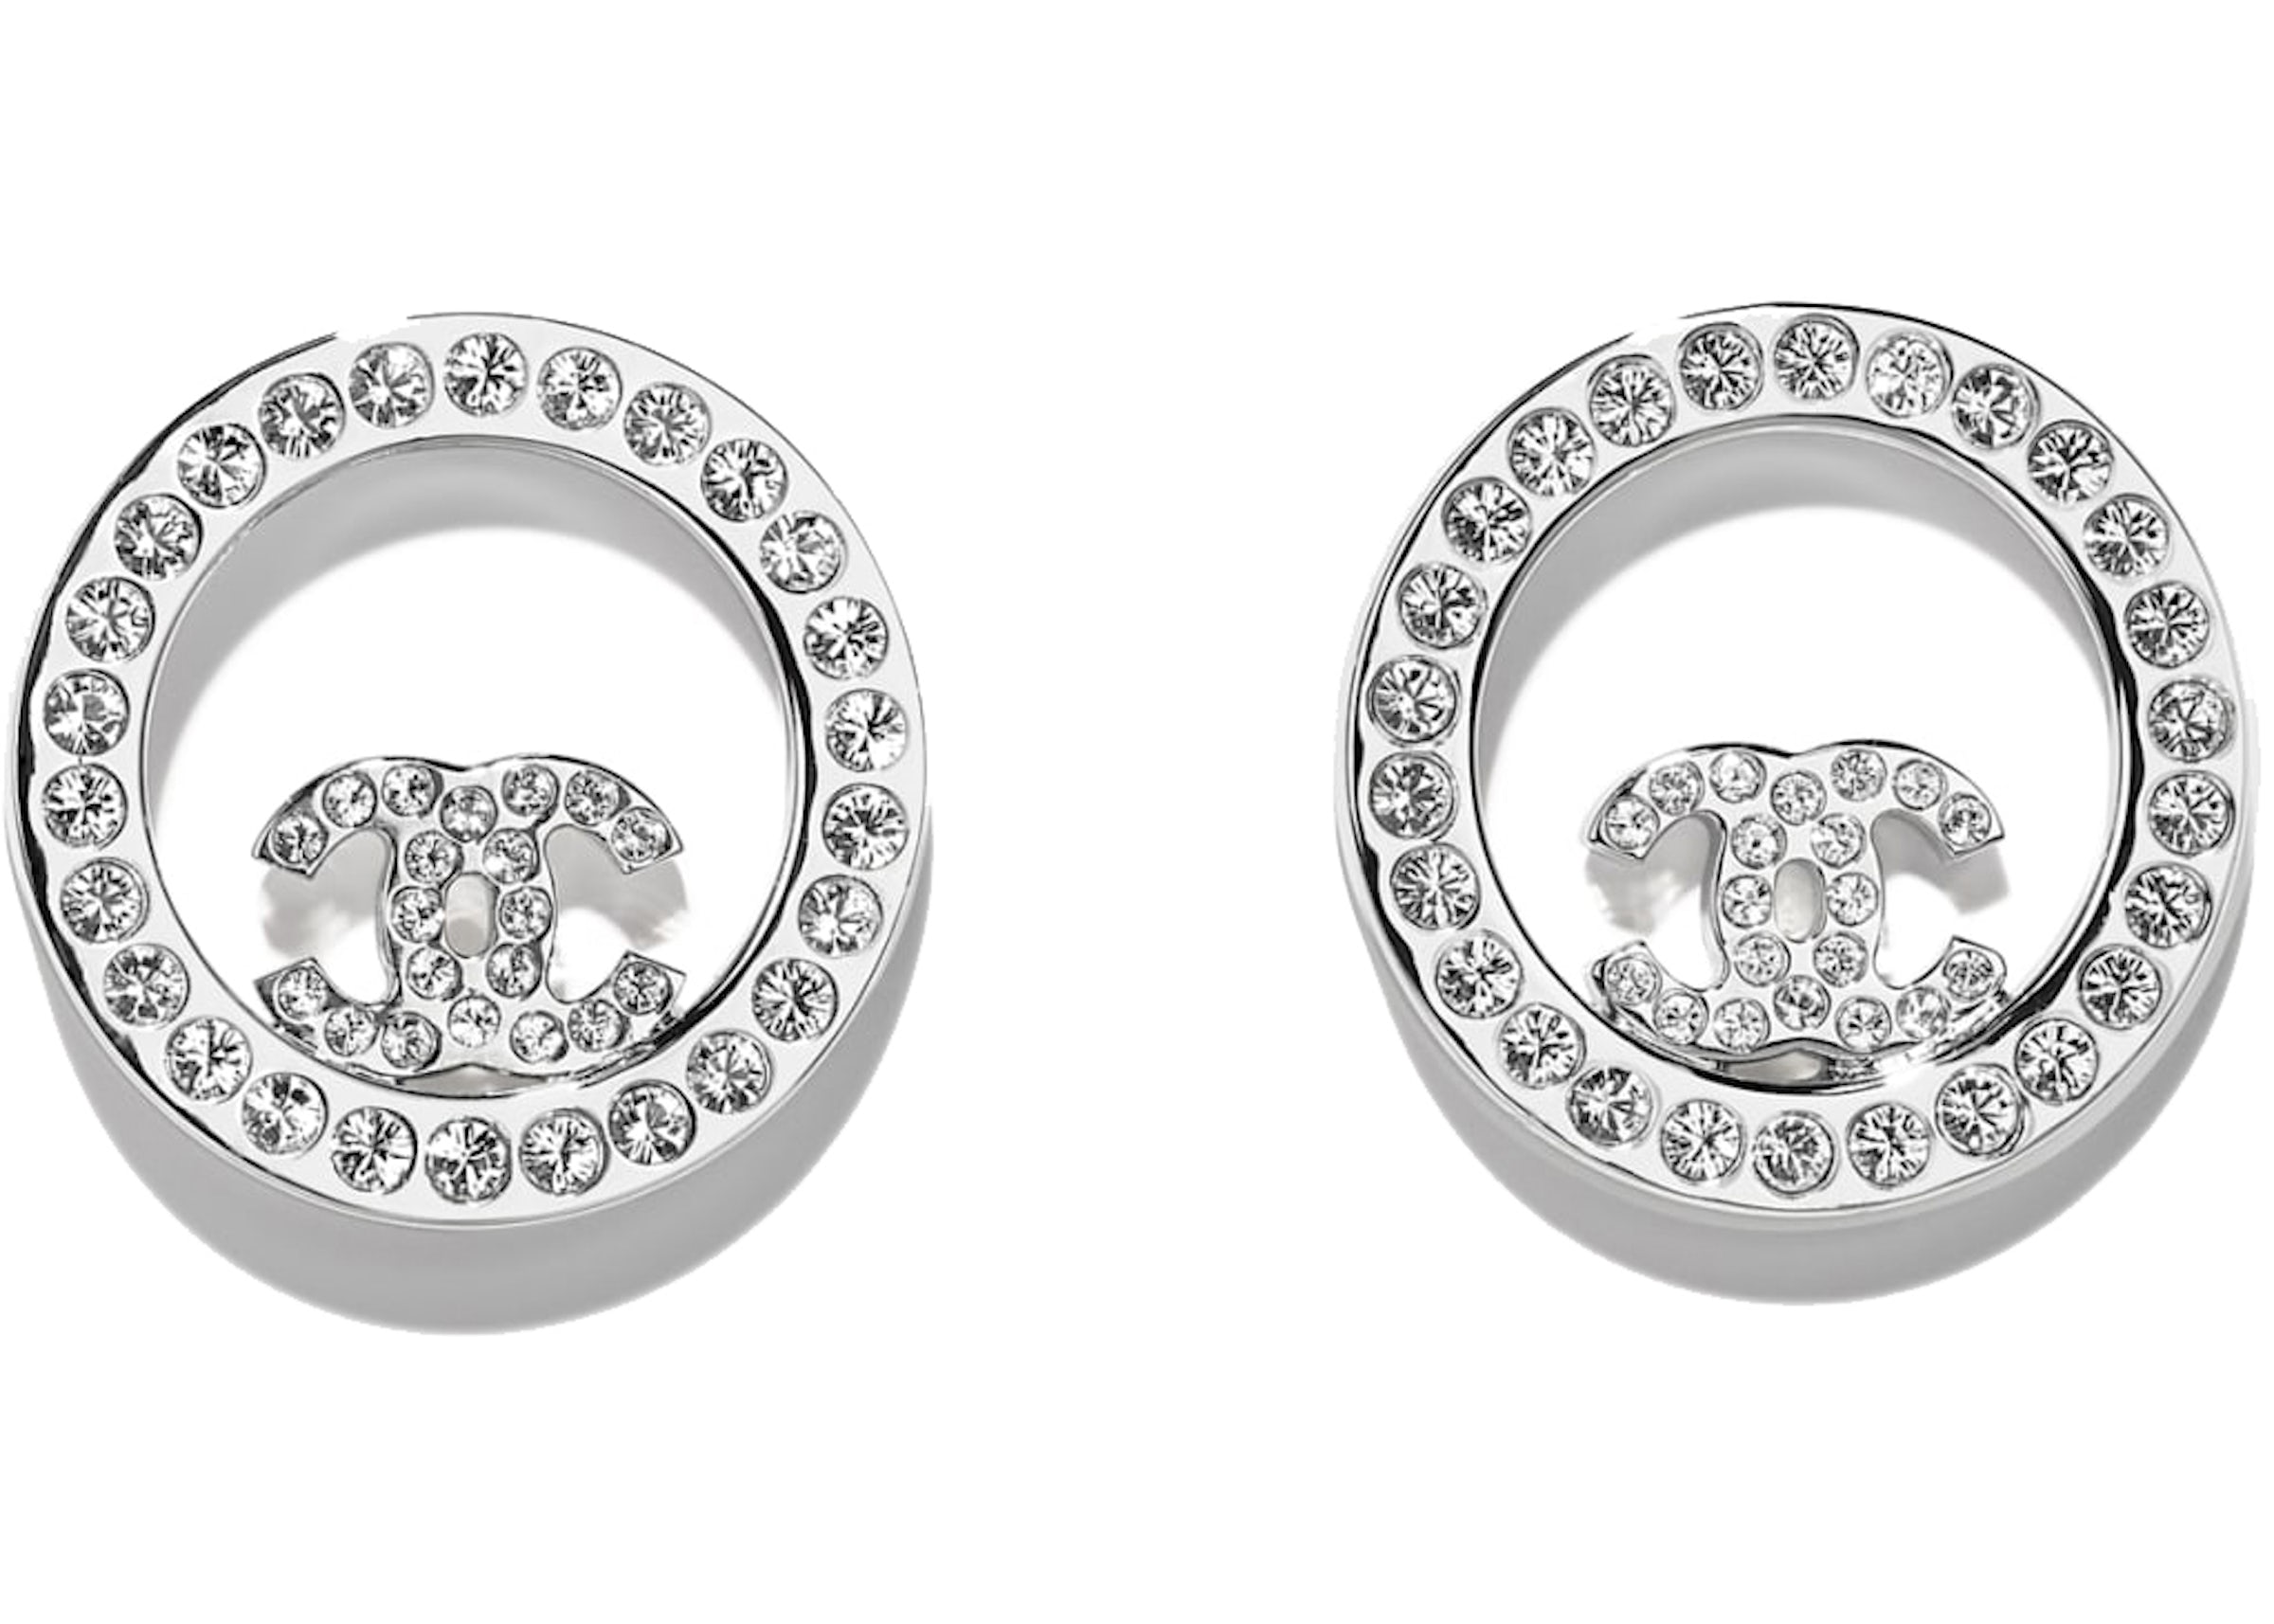 Chanel Classic Earrings Silver/Crystal in Silver Metal - US